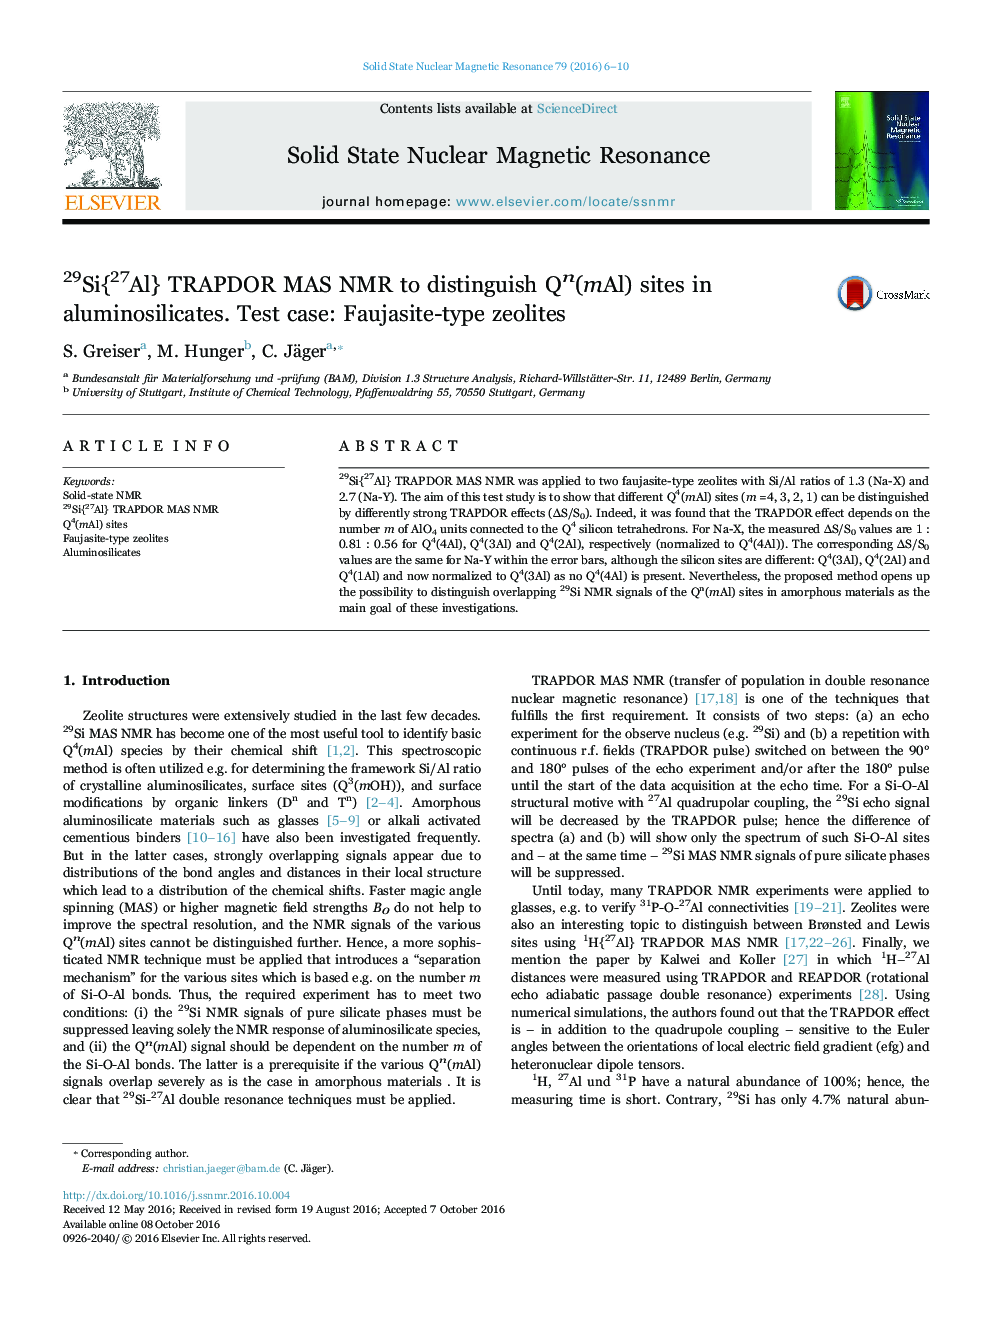 29Si{27Al} TRAPDOR MAS NMR to distinguish Qn(mAl) sites in aluminosilicates. Test case: Faujasite-type zeolites